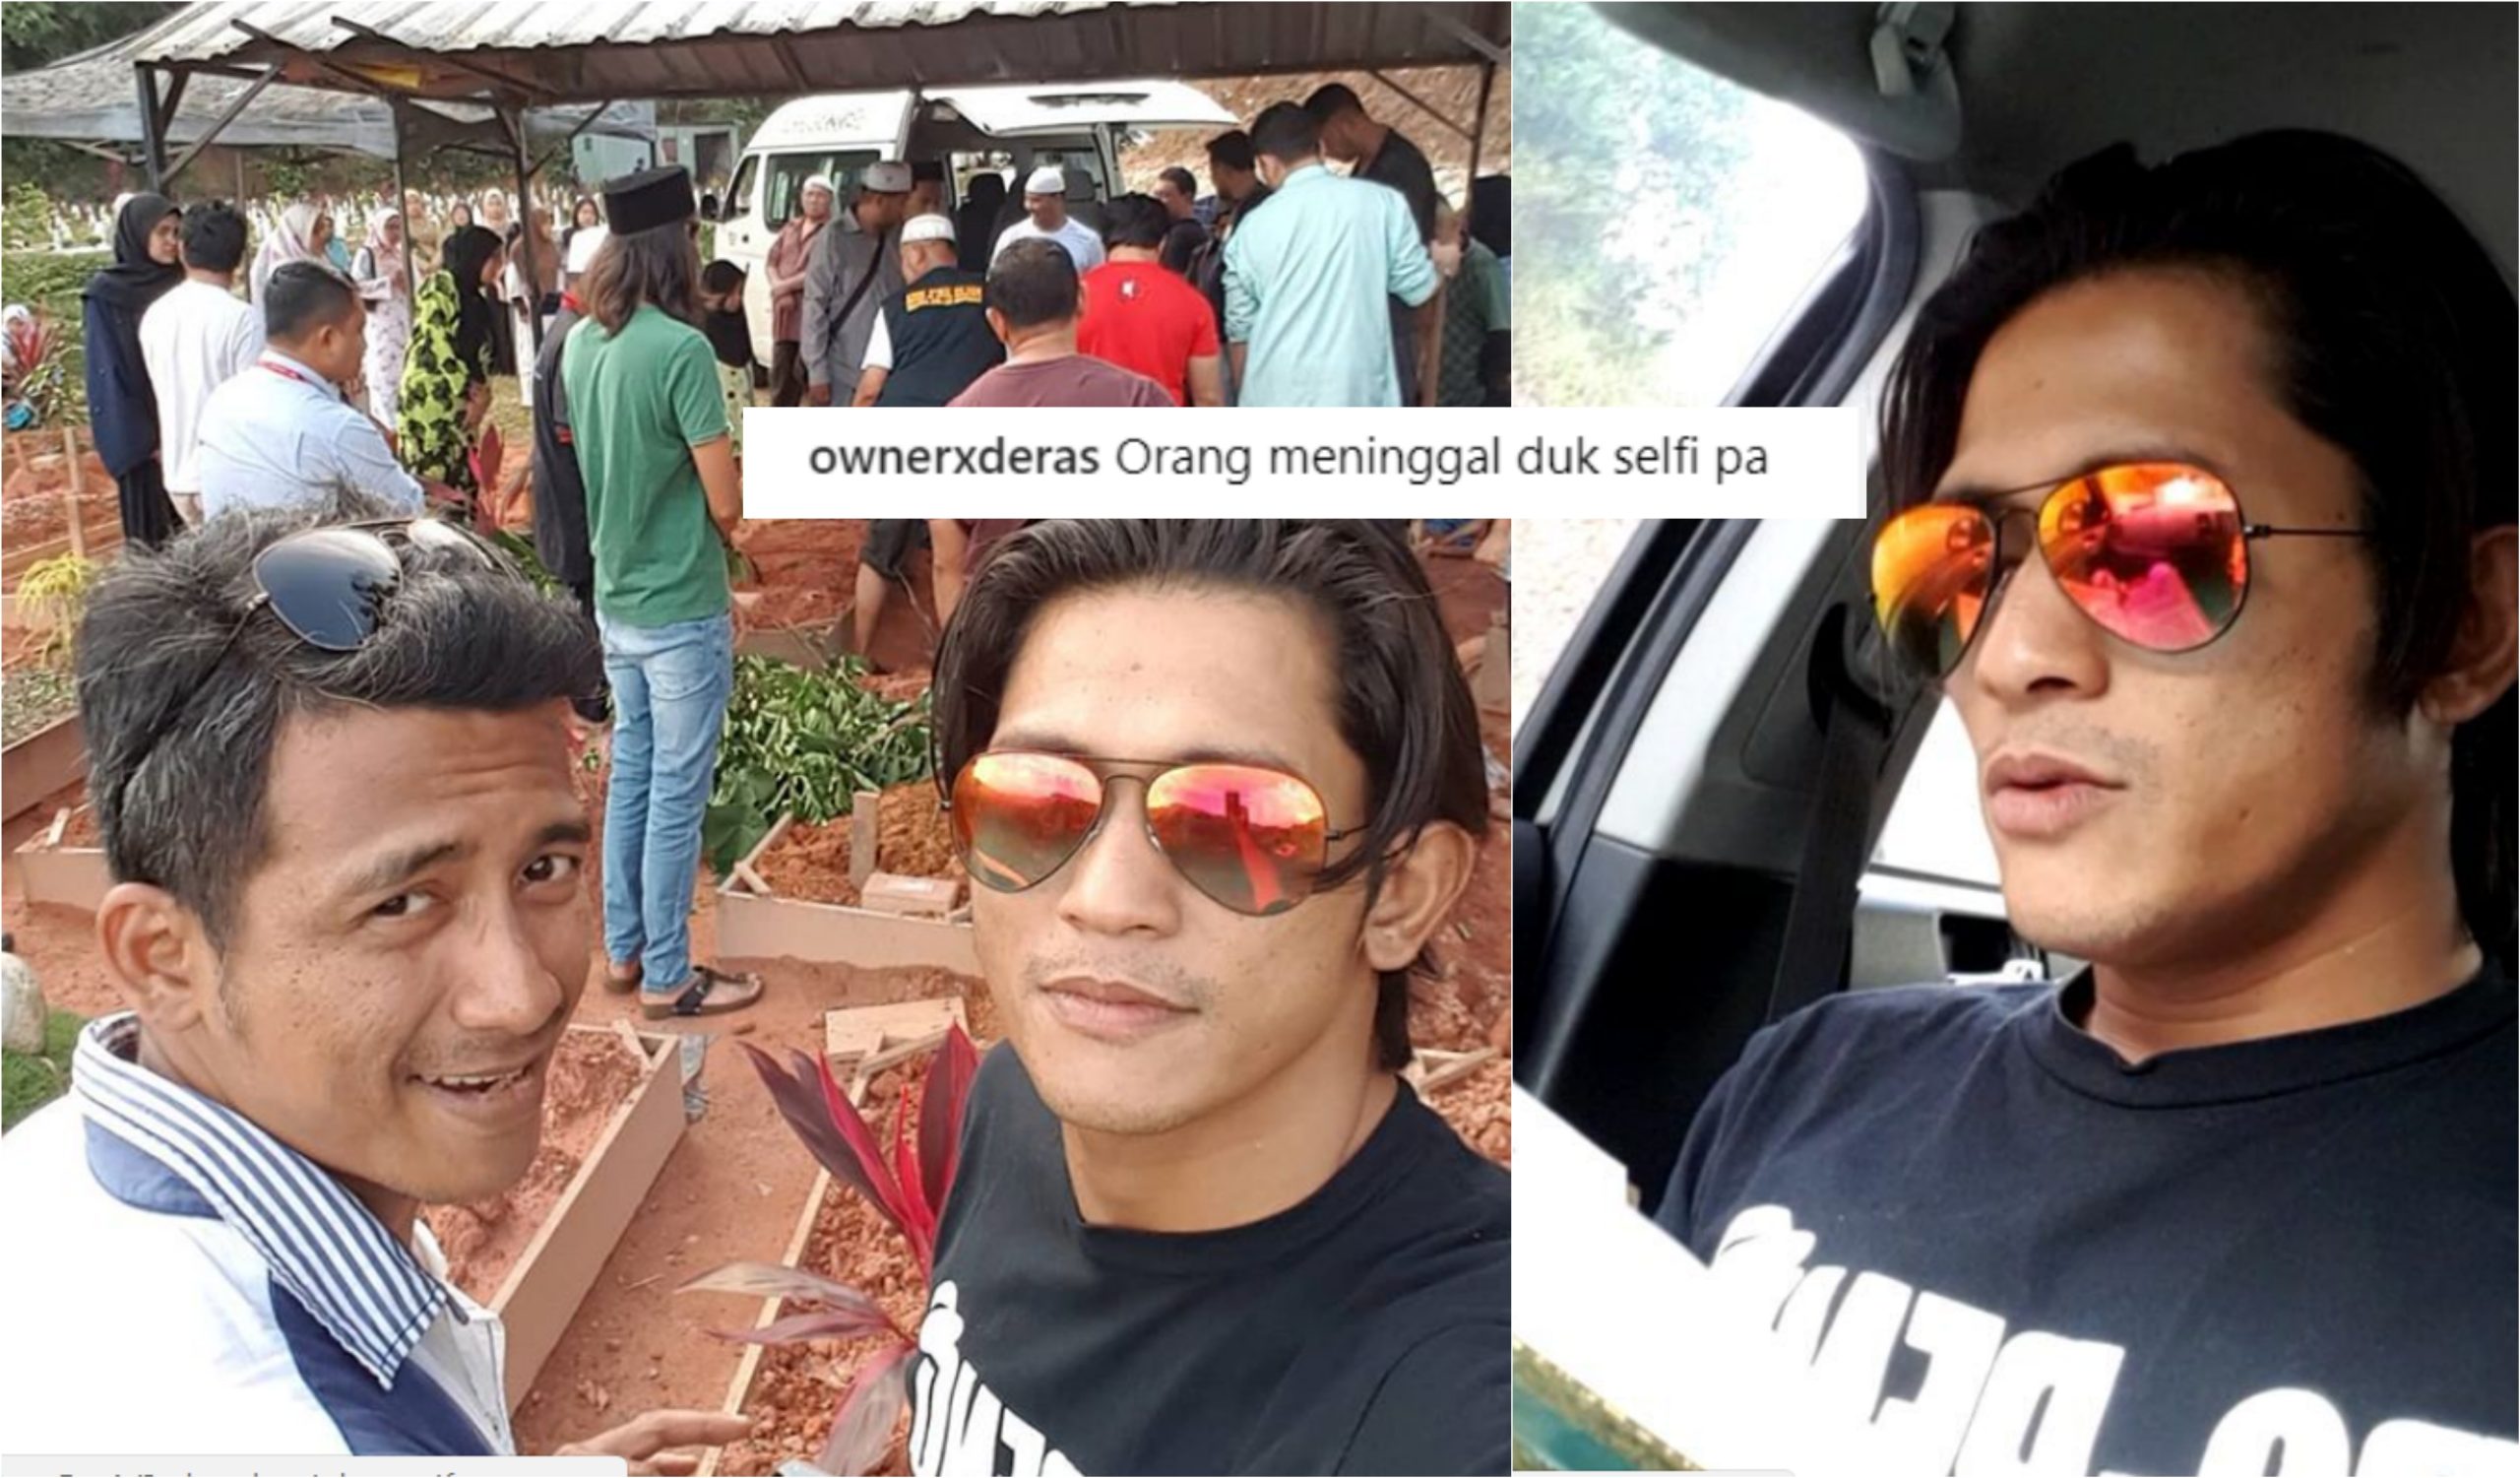 ‘Bodoh Kat Kubur Pun Nak Selfie’ – Muat Naik Swafoto Di Kubur, Johan Ariff Dikritik Netizen